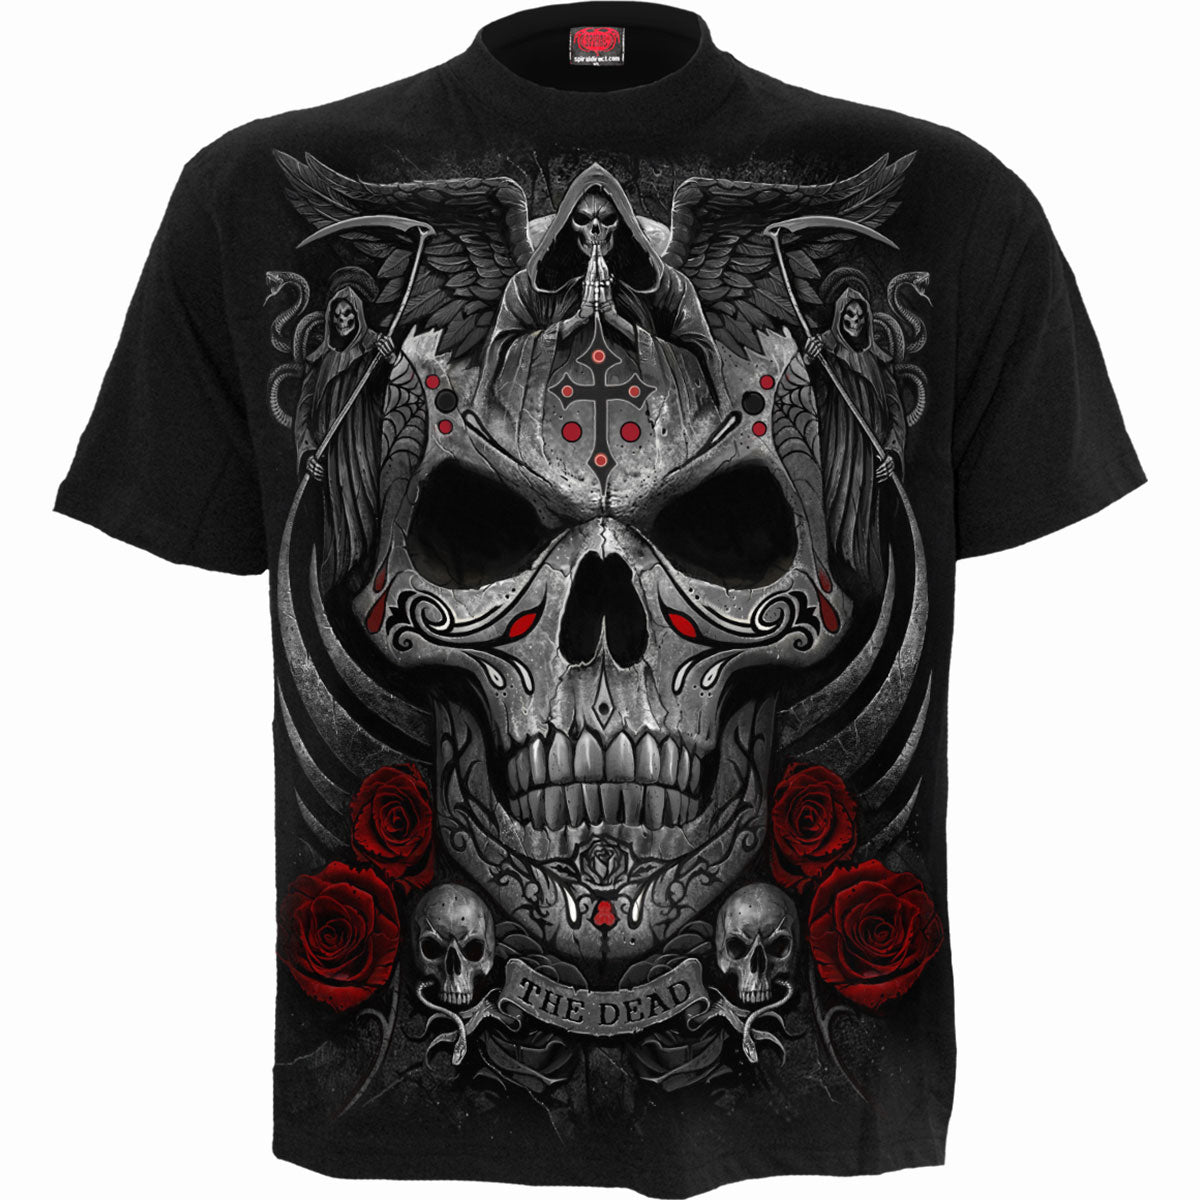 THE DEAD - T-Shirt Black – Spiral Direct